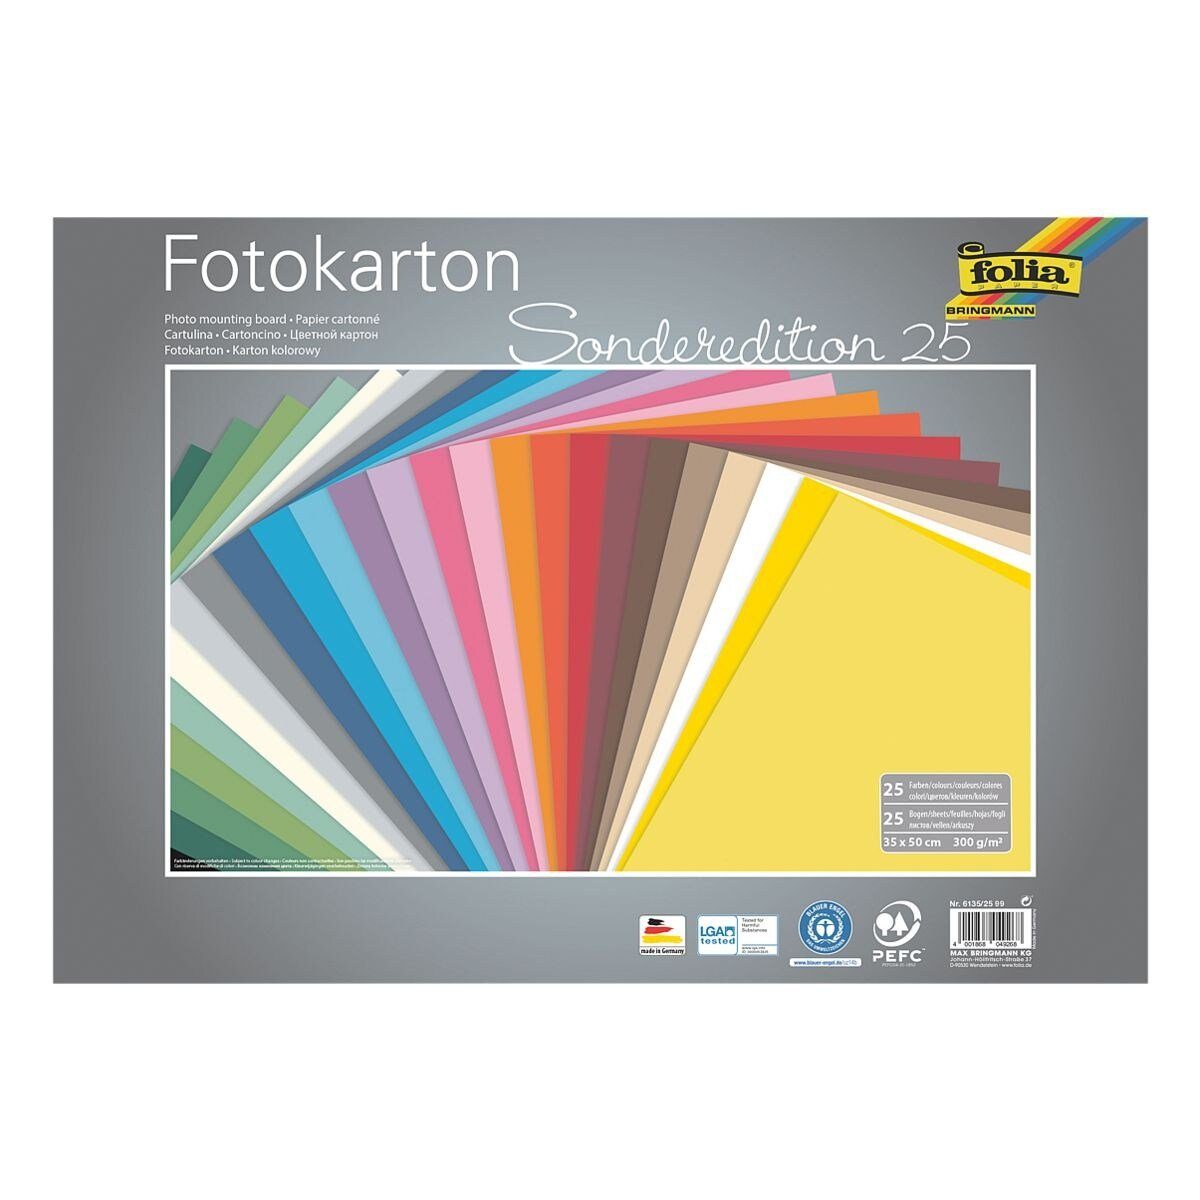 25 Sonderedition Fotokarton Folia Bastelkartonpapier 25 35x50 25, Farben, g/m², cm, 300 Blatt